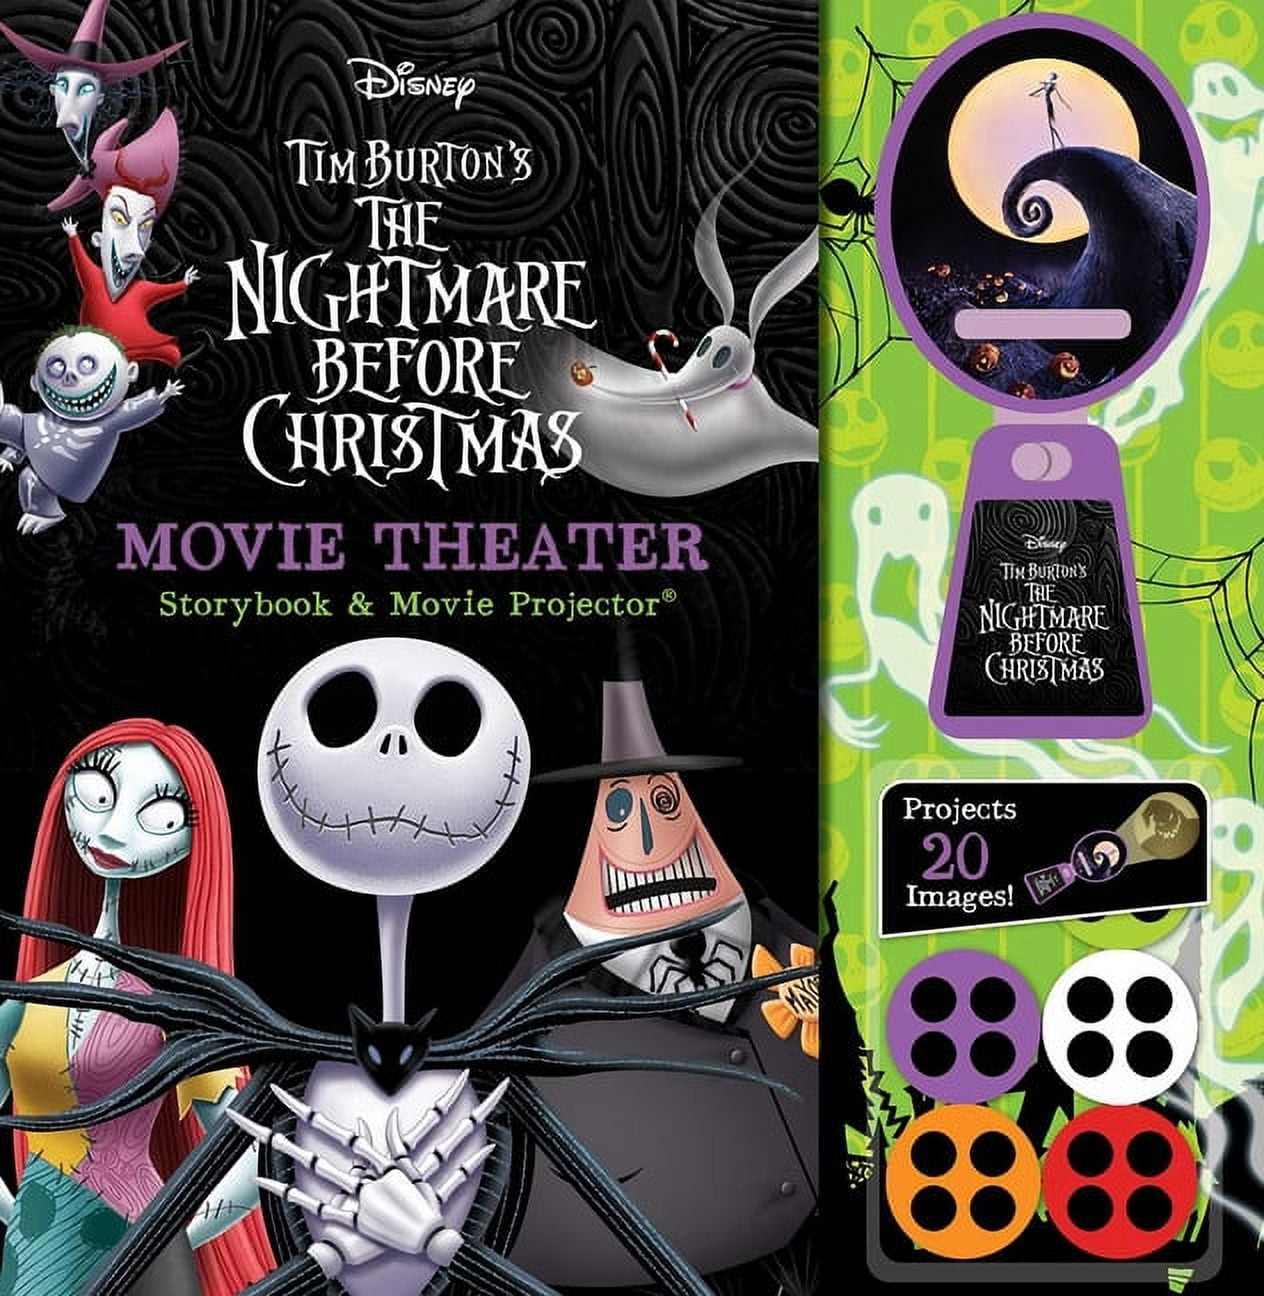 The Nightmare Before Christmas by Tim Burton, Hardcover